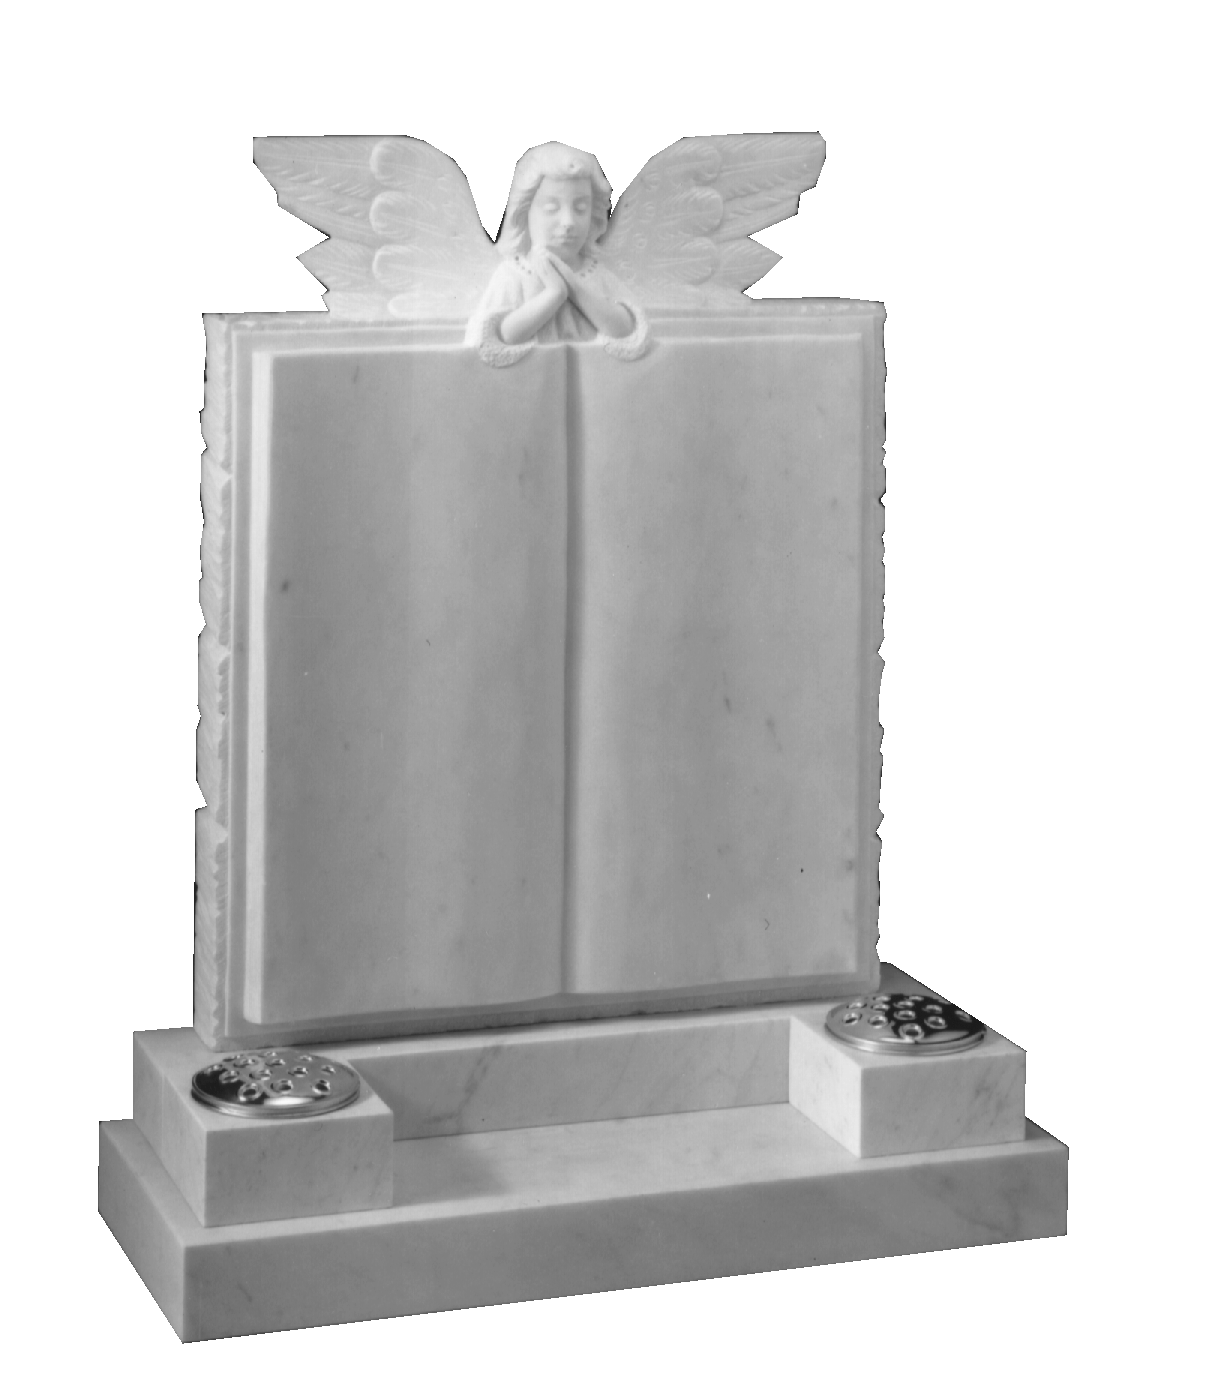 Buy Marble Headstone Hand carved Angel over book design MemorialsMarble Headstones for Sale